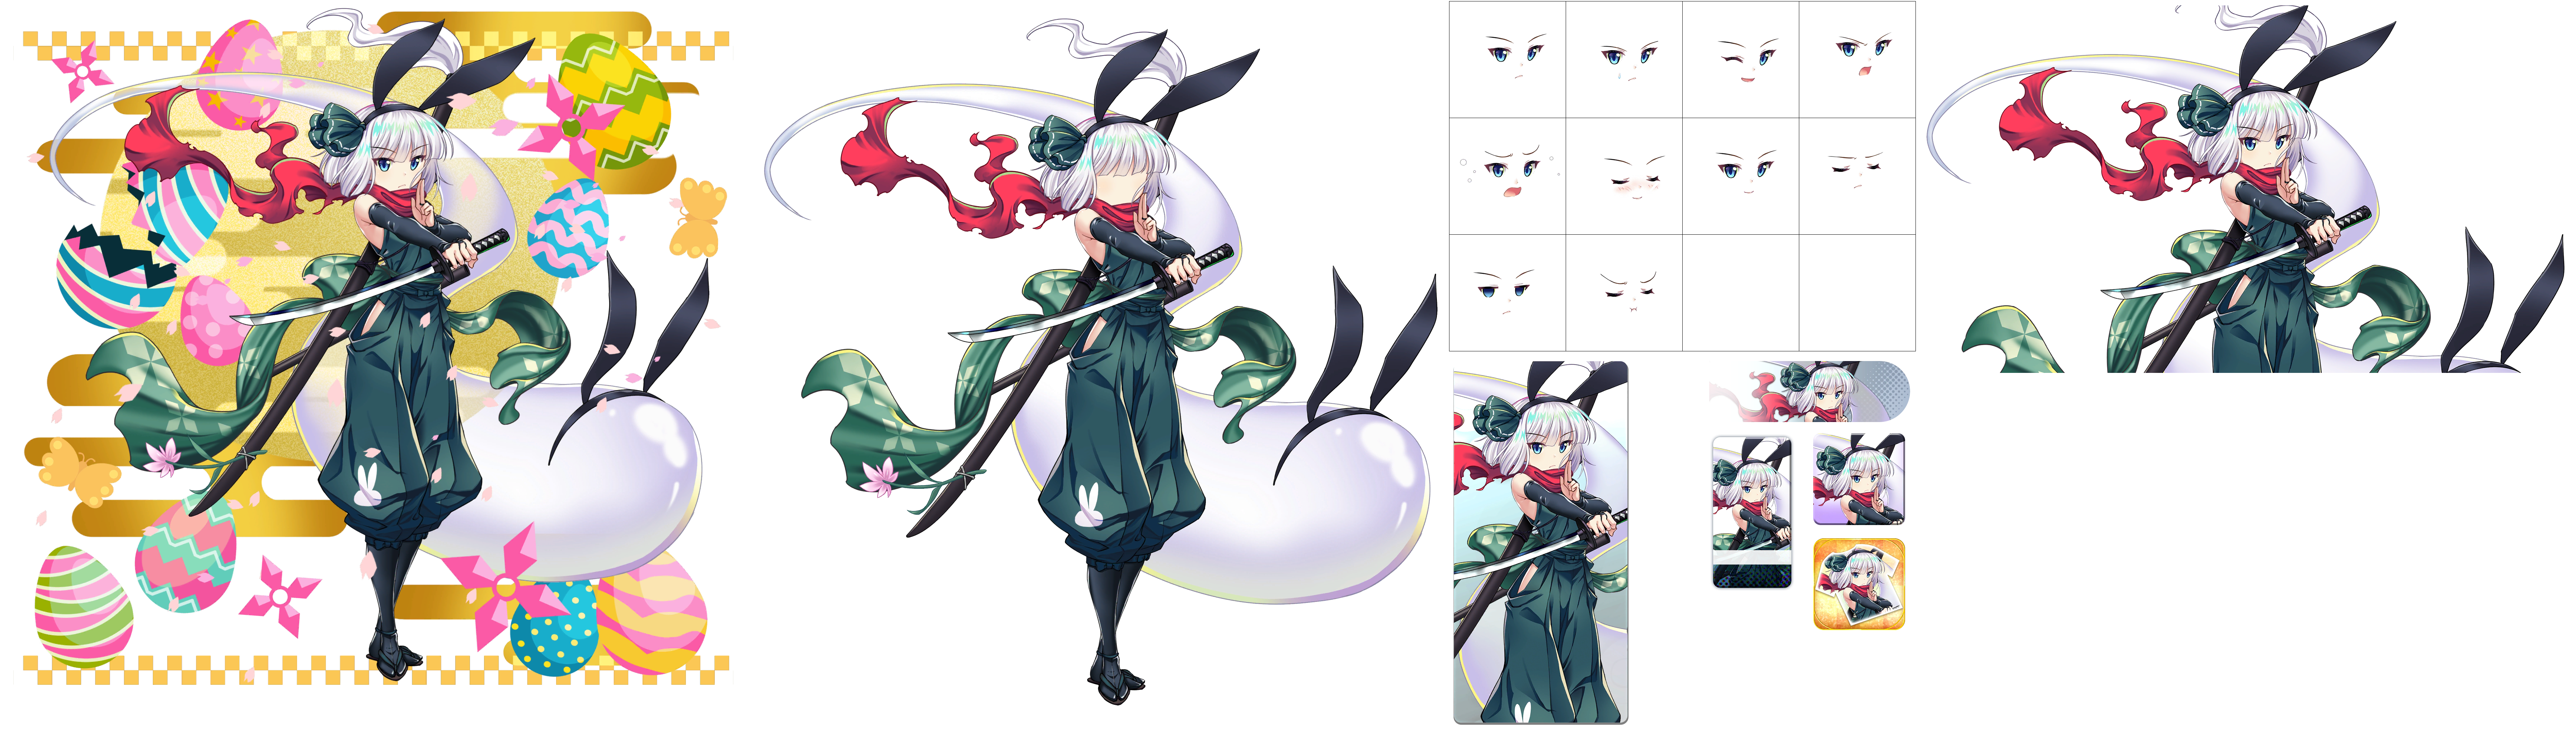 Touhou LostWord - Youmu Konpaku (Bunny Ninja Spirit)